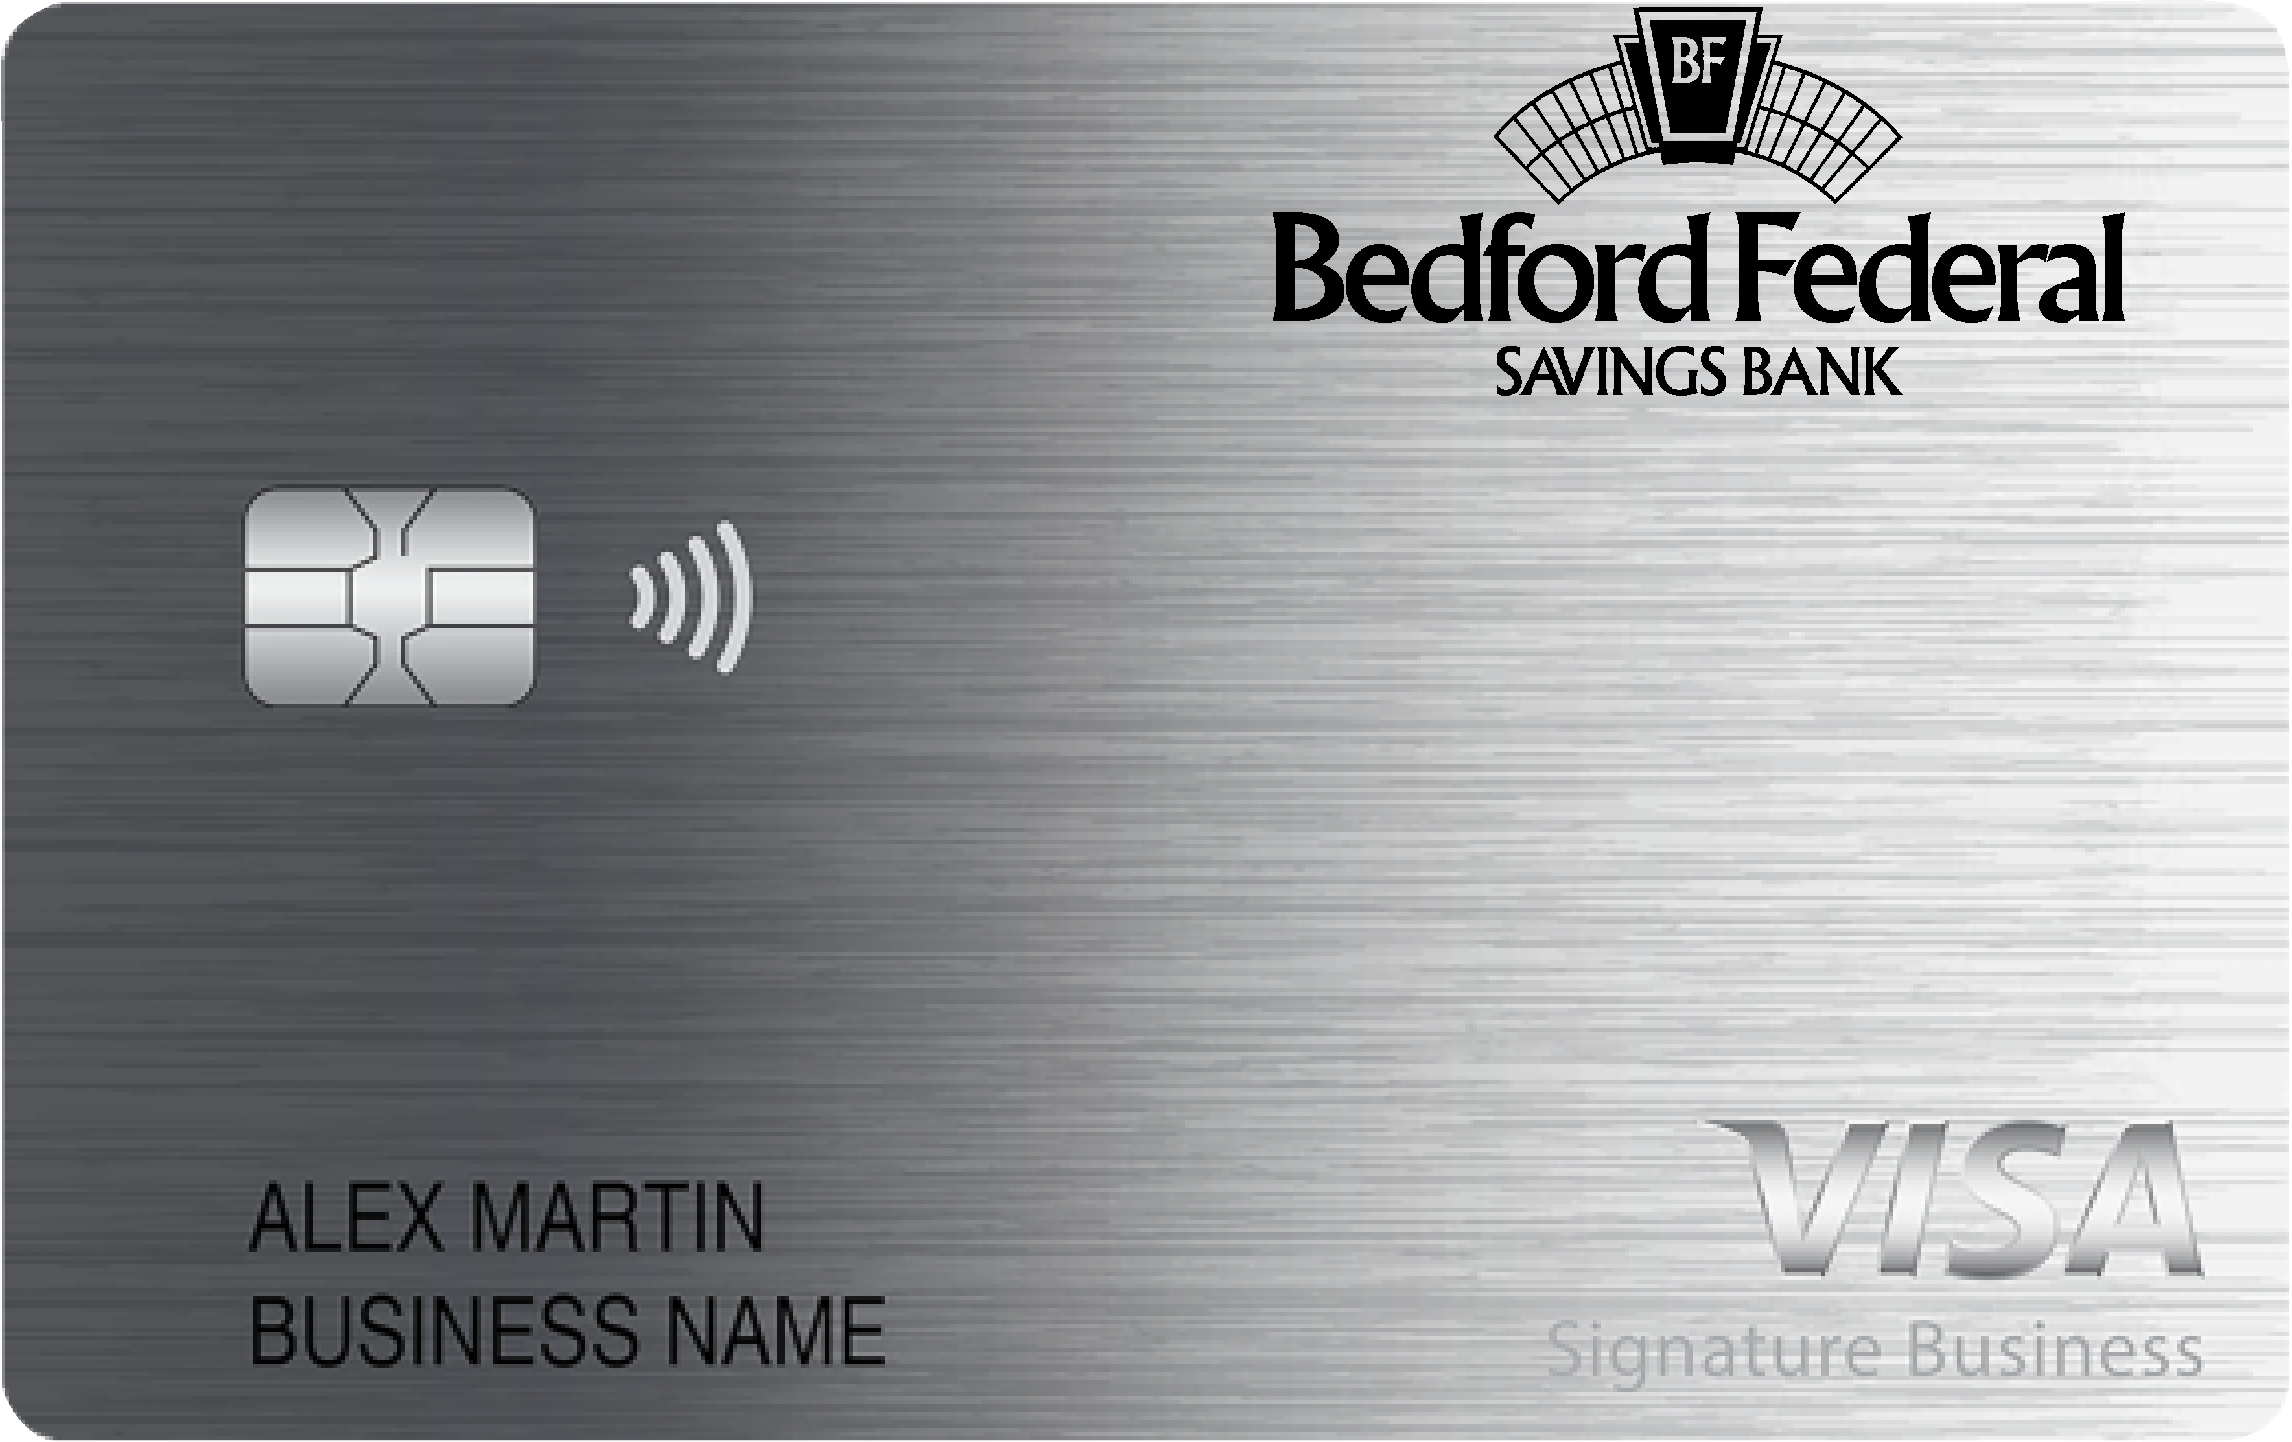 Bedford Federal Savings Bank Smart Business Rewards Card